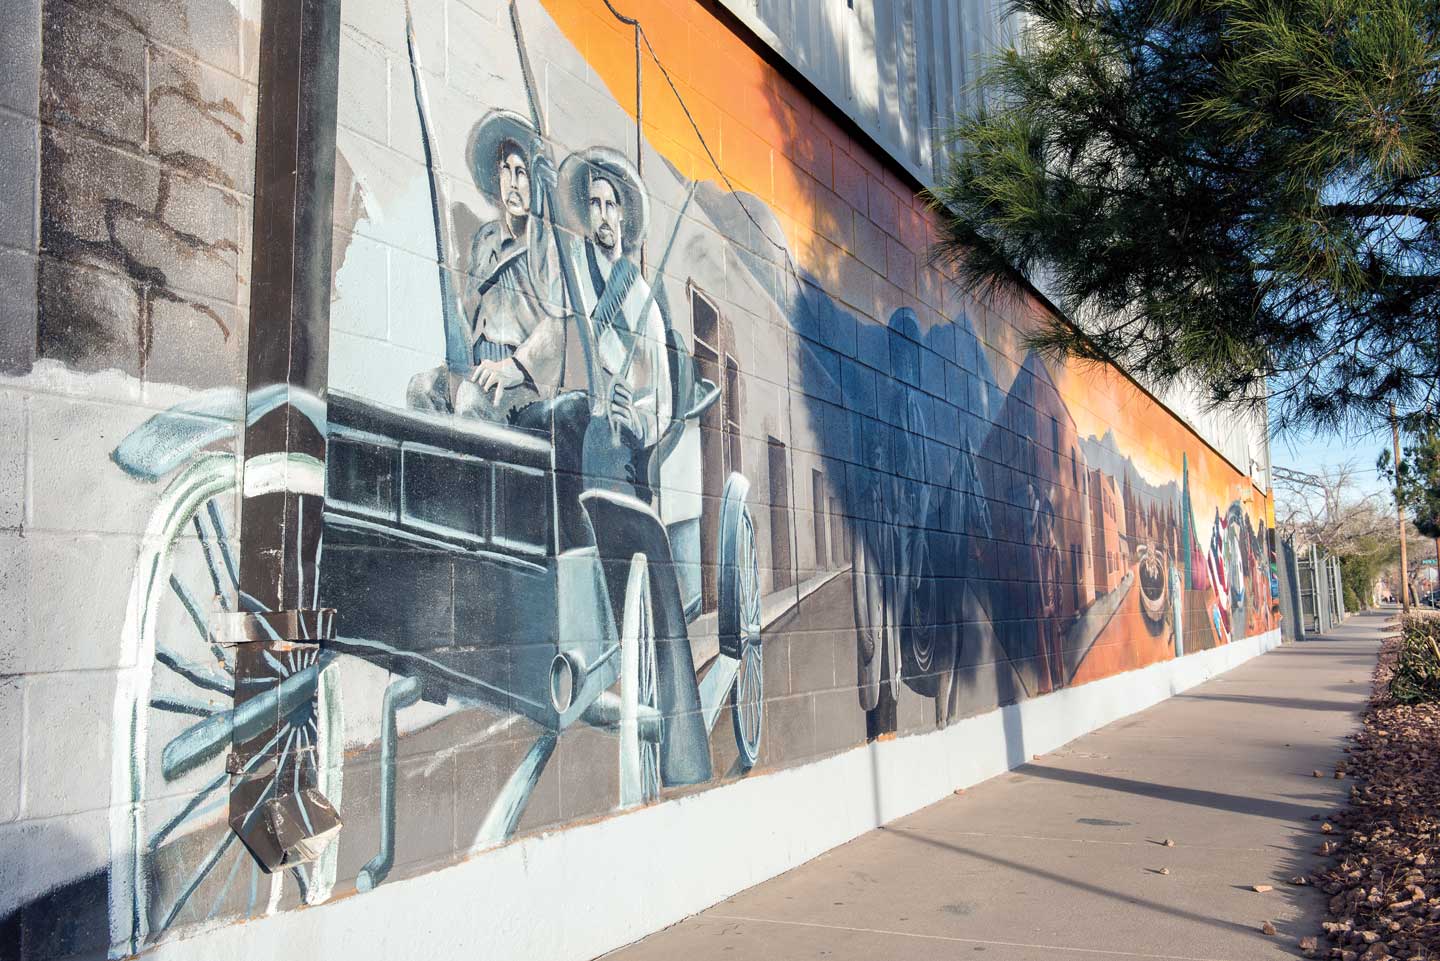 A mural in downtown El Paso